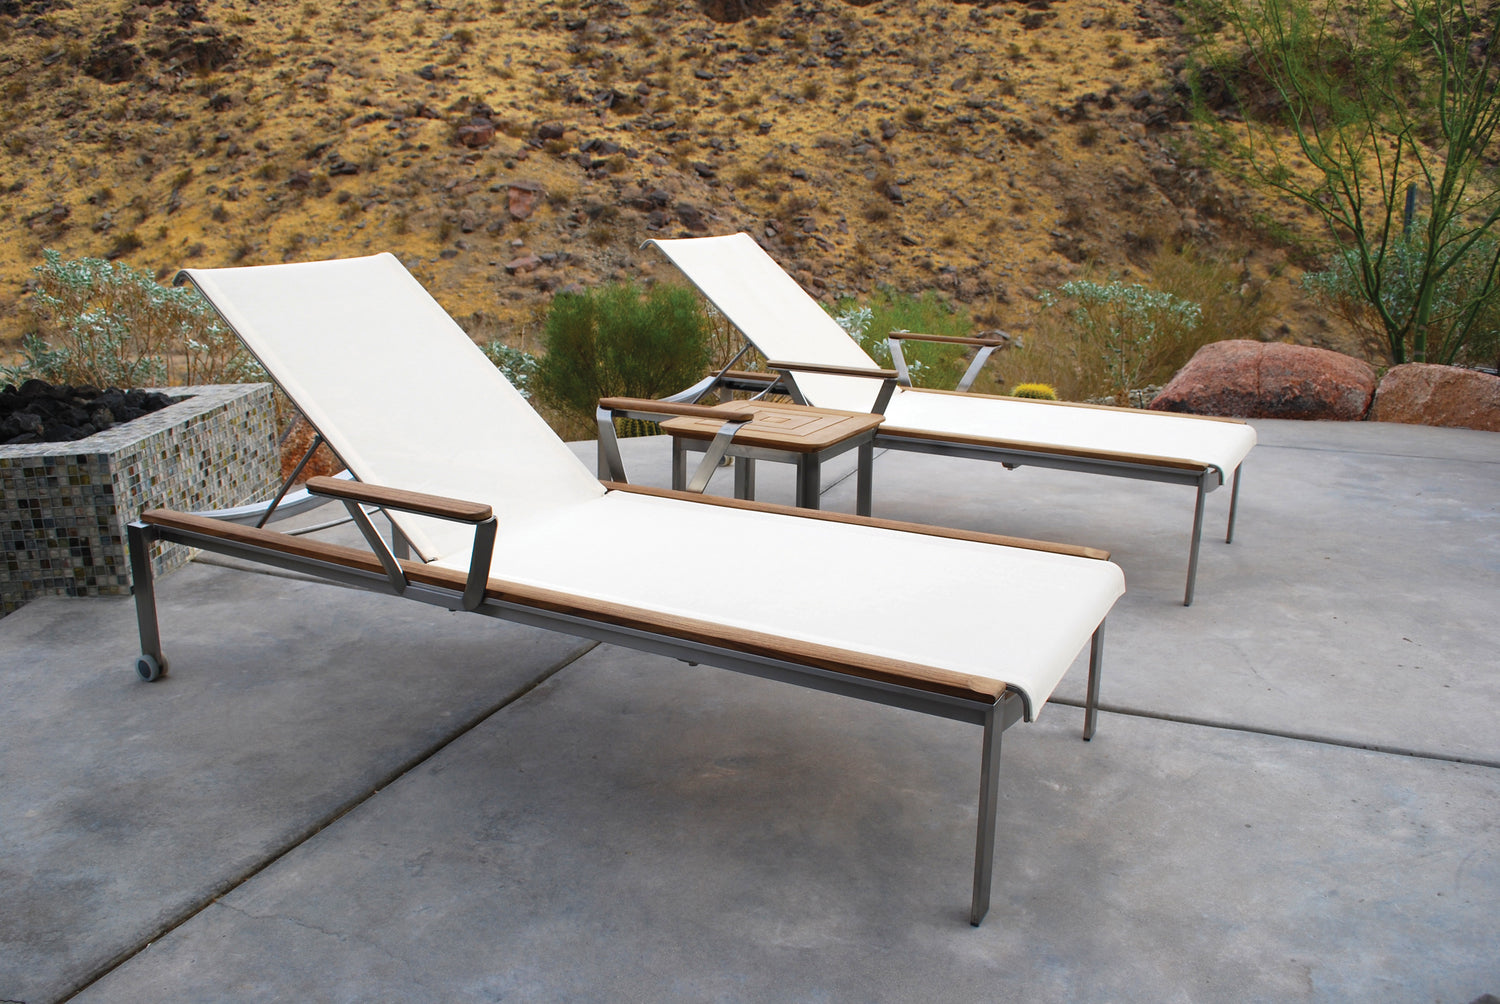 Side Table | Kingsley Bate Tivoli Collection | Valley Ridge Furniture